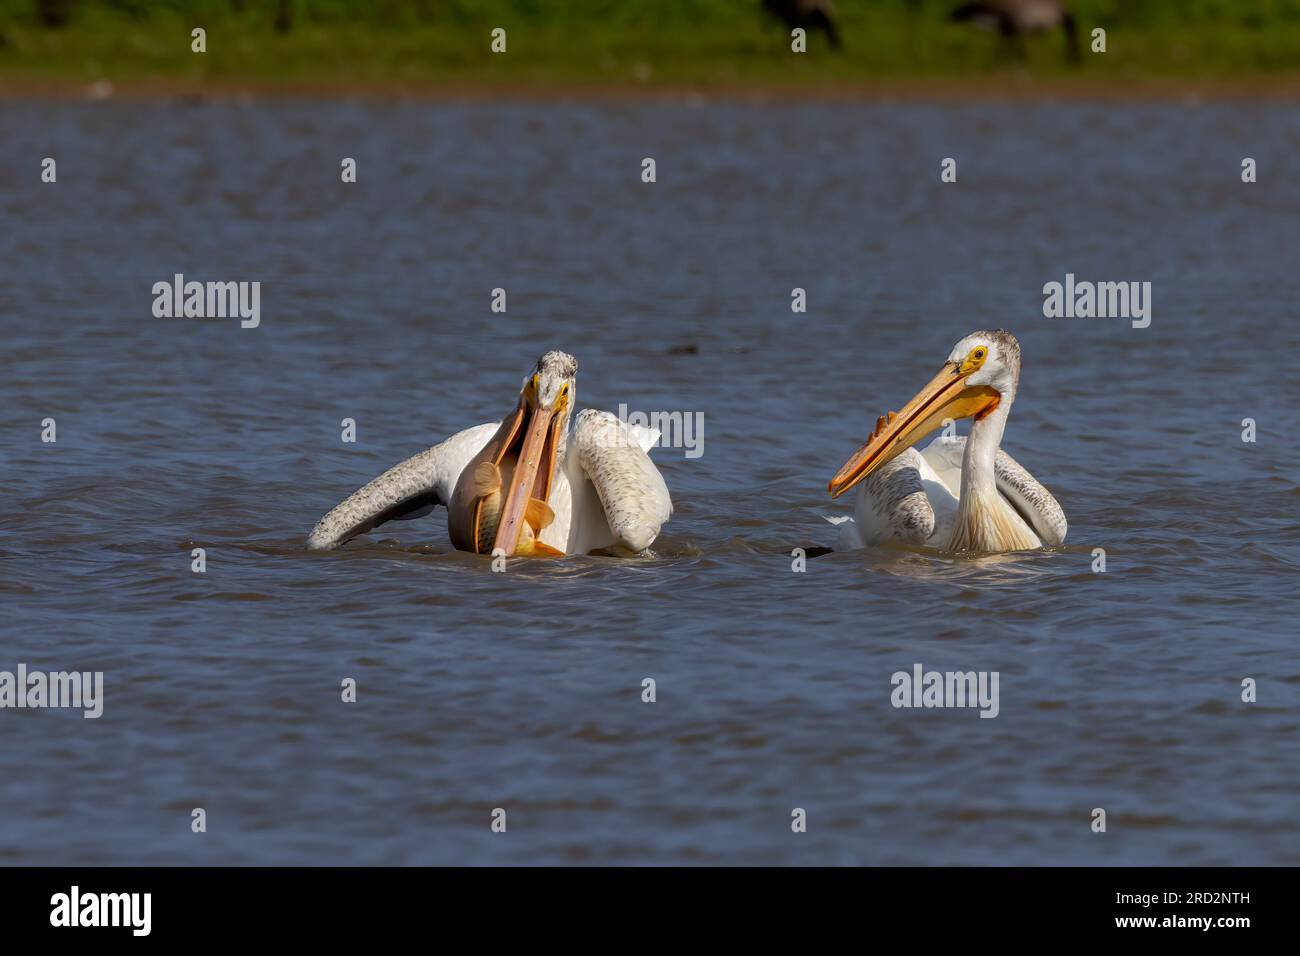 The  American white pelican (Pelecanus erythrorhynchos) on the hunt Stock Photo